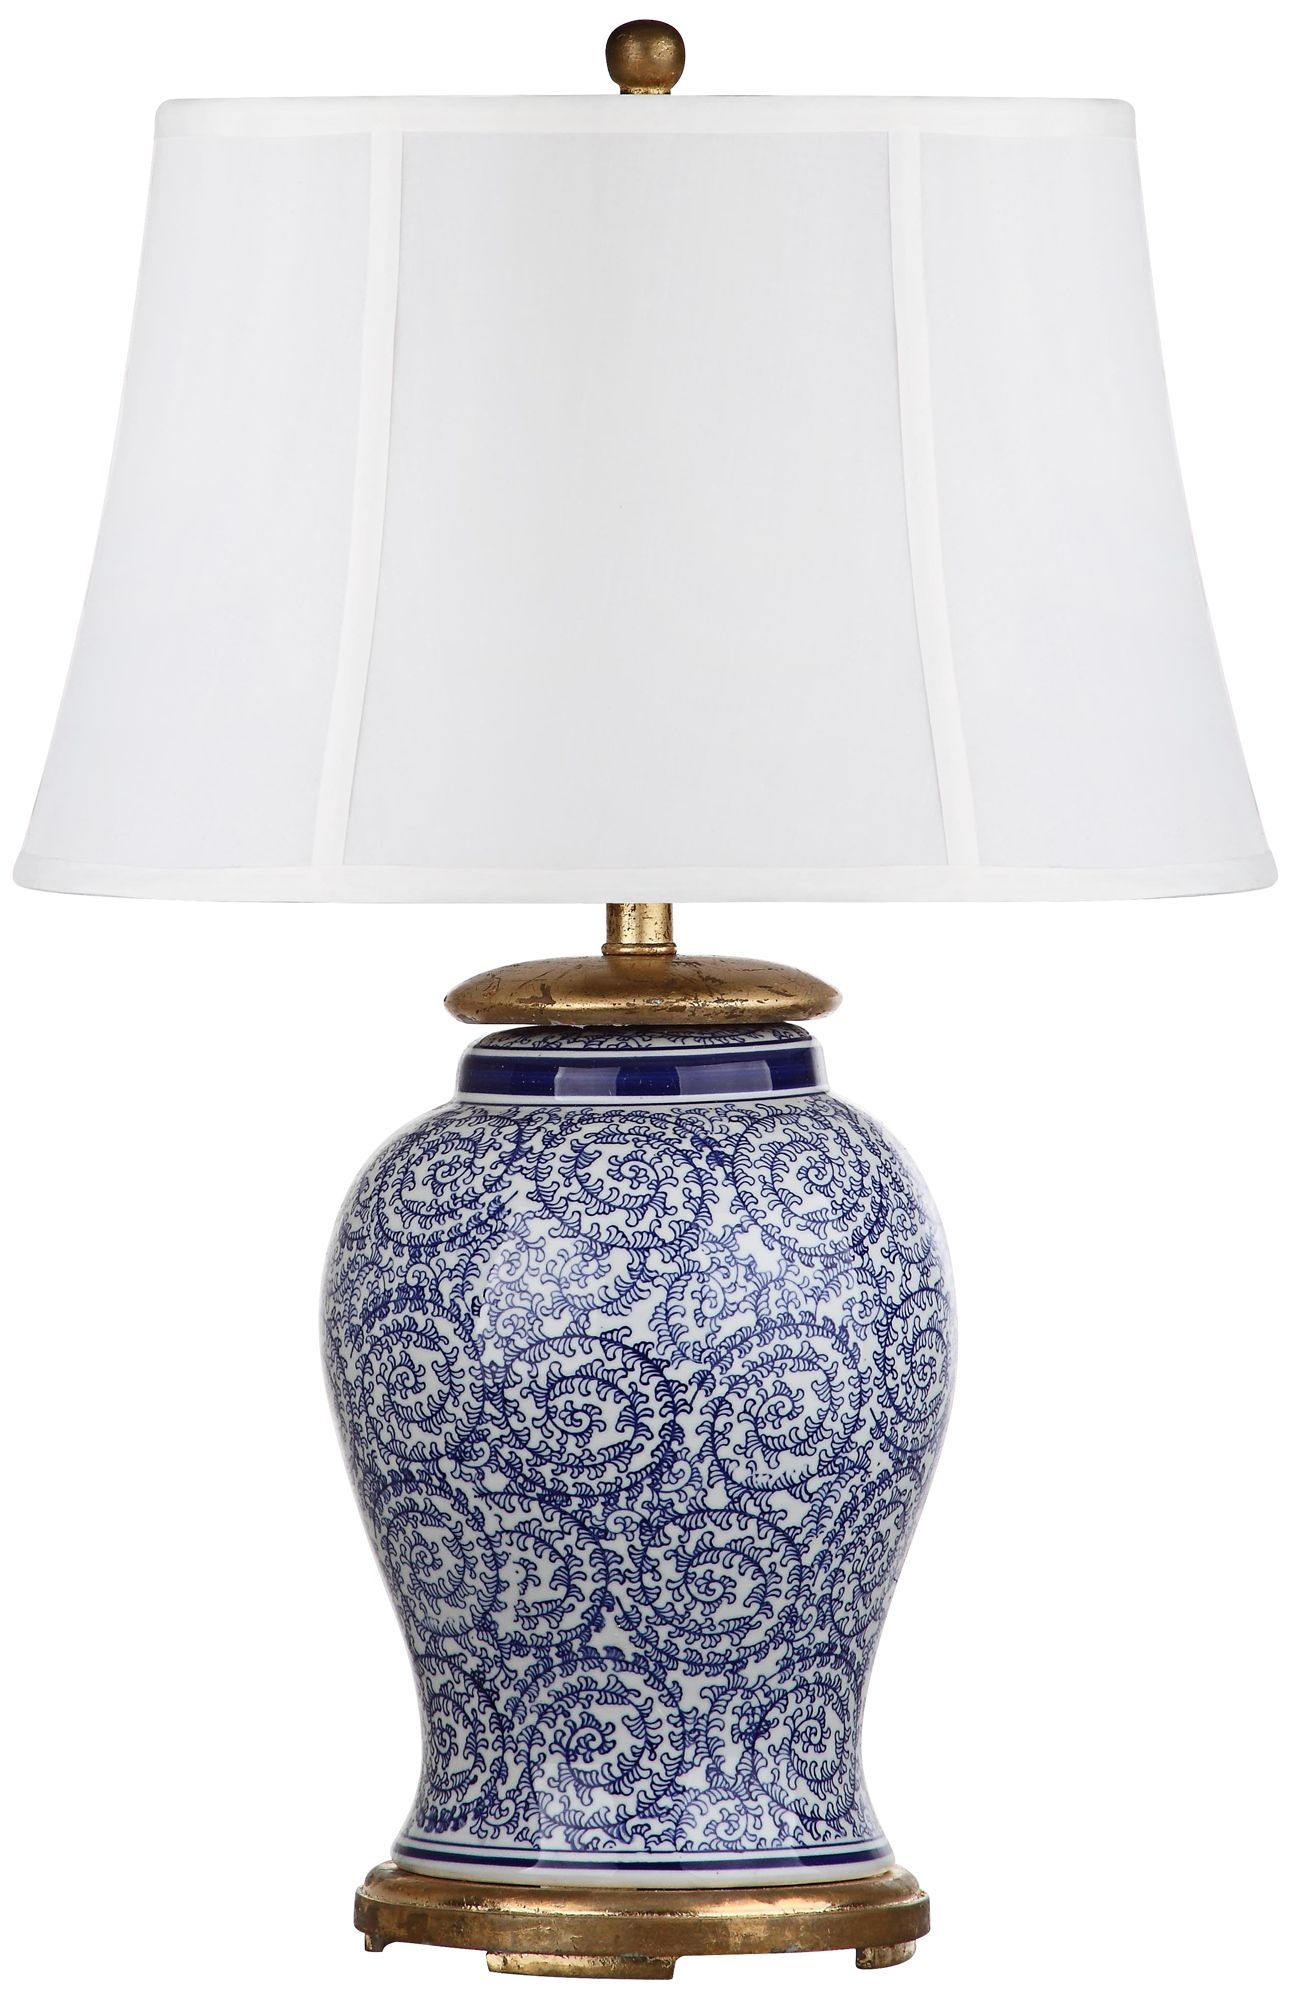 Dalton Blue and White Porcelain Table Lamp - Image 0